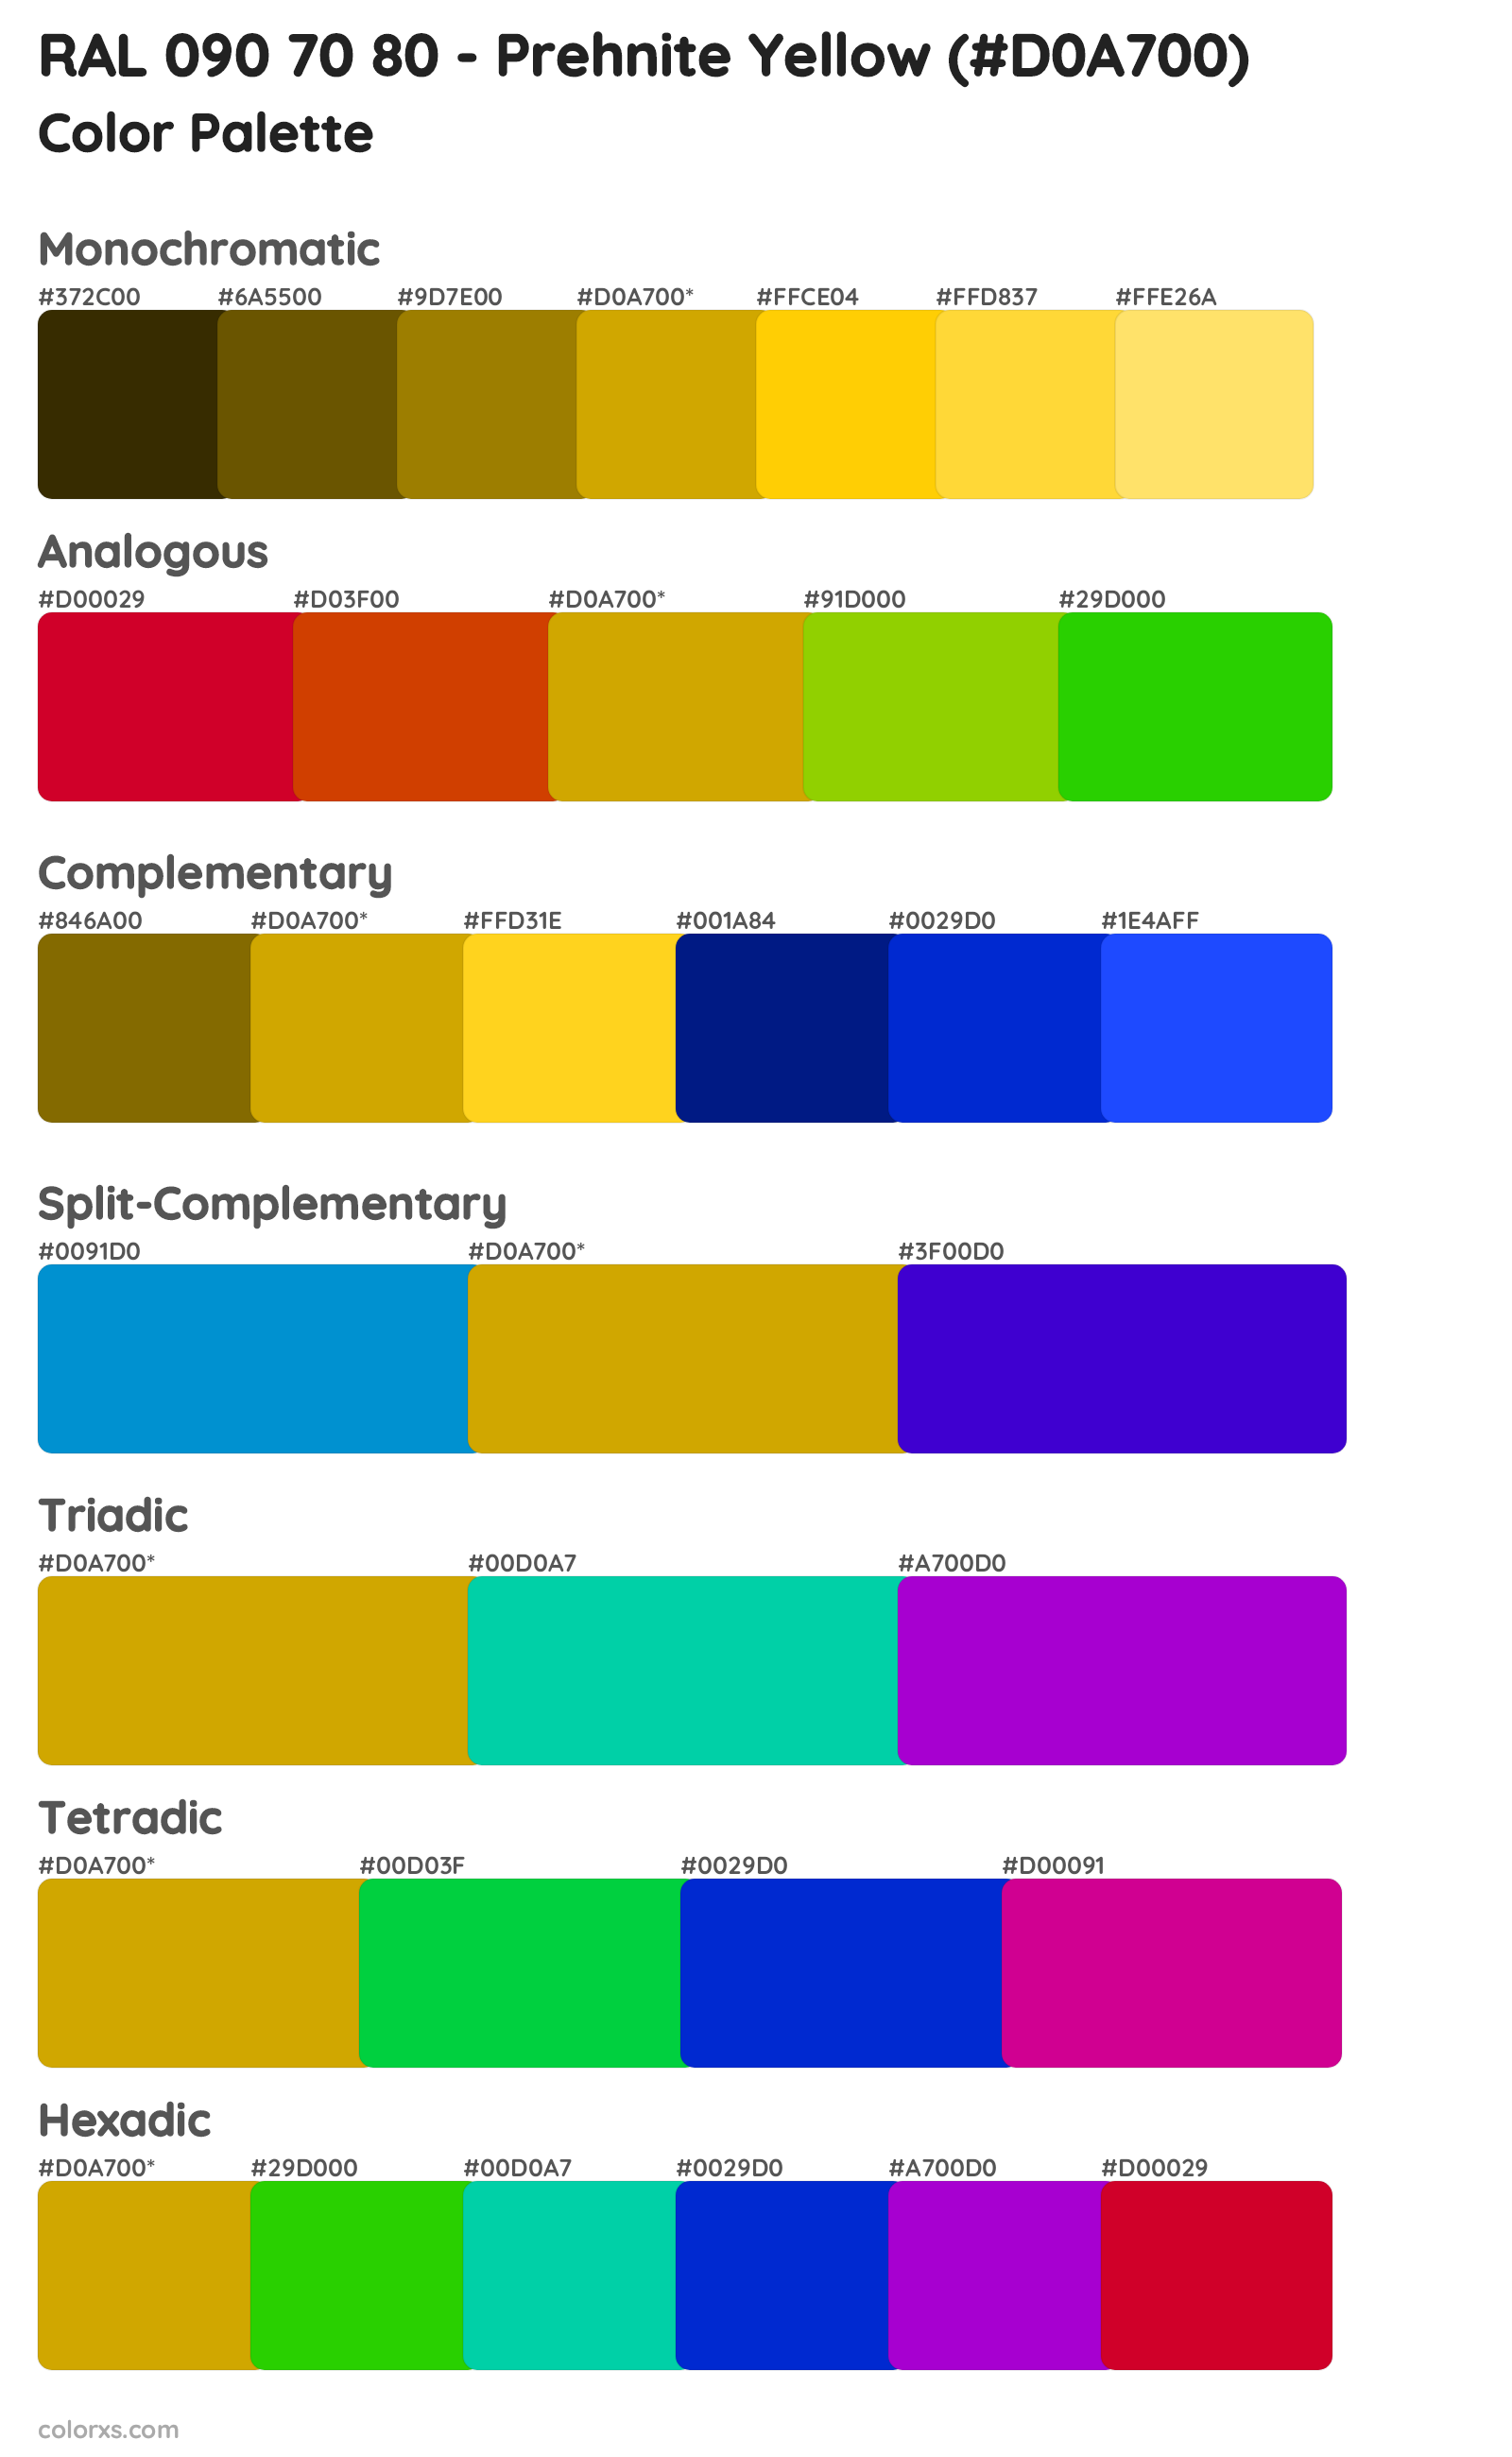 RAL 090 70 80 - Prehnite Yellow Color Scheme Palettes